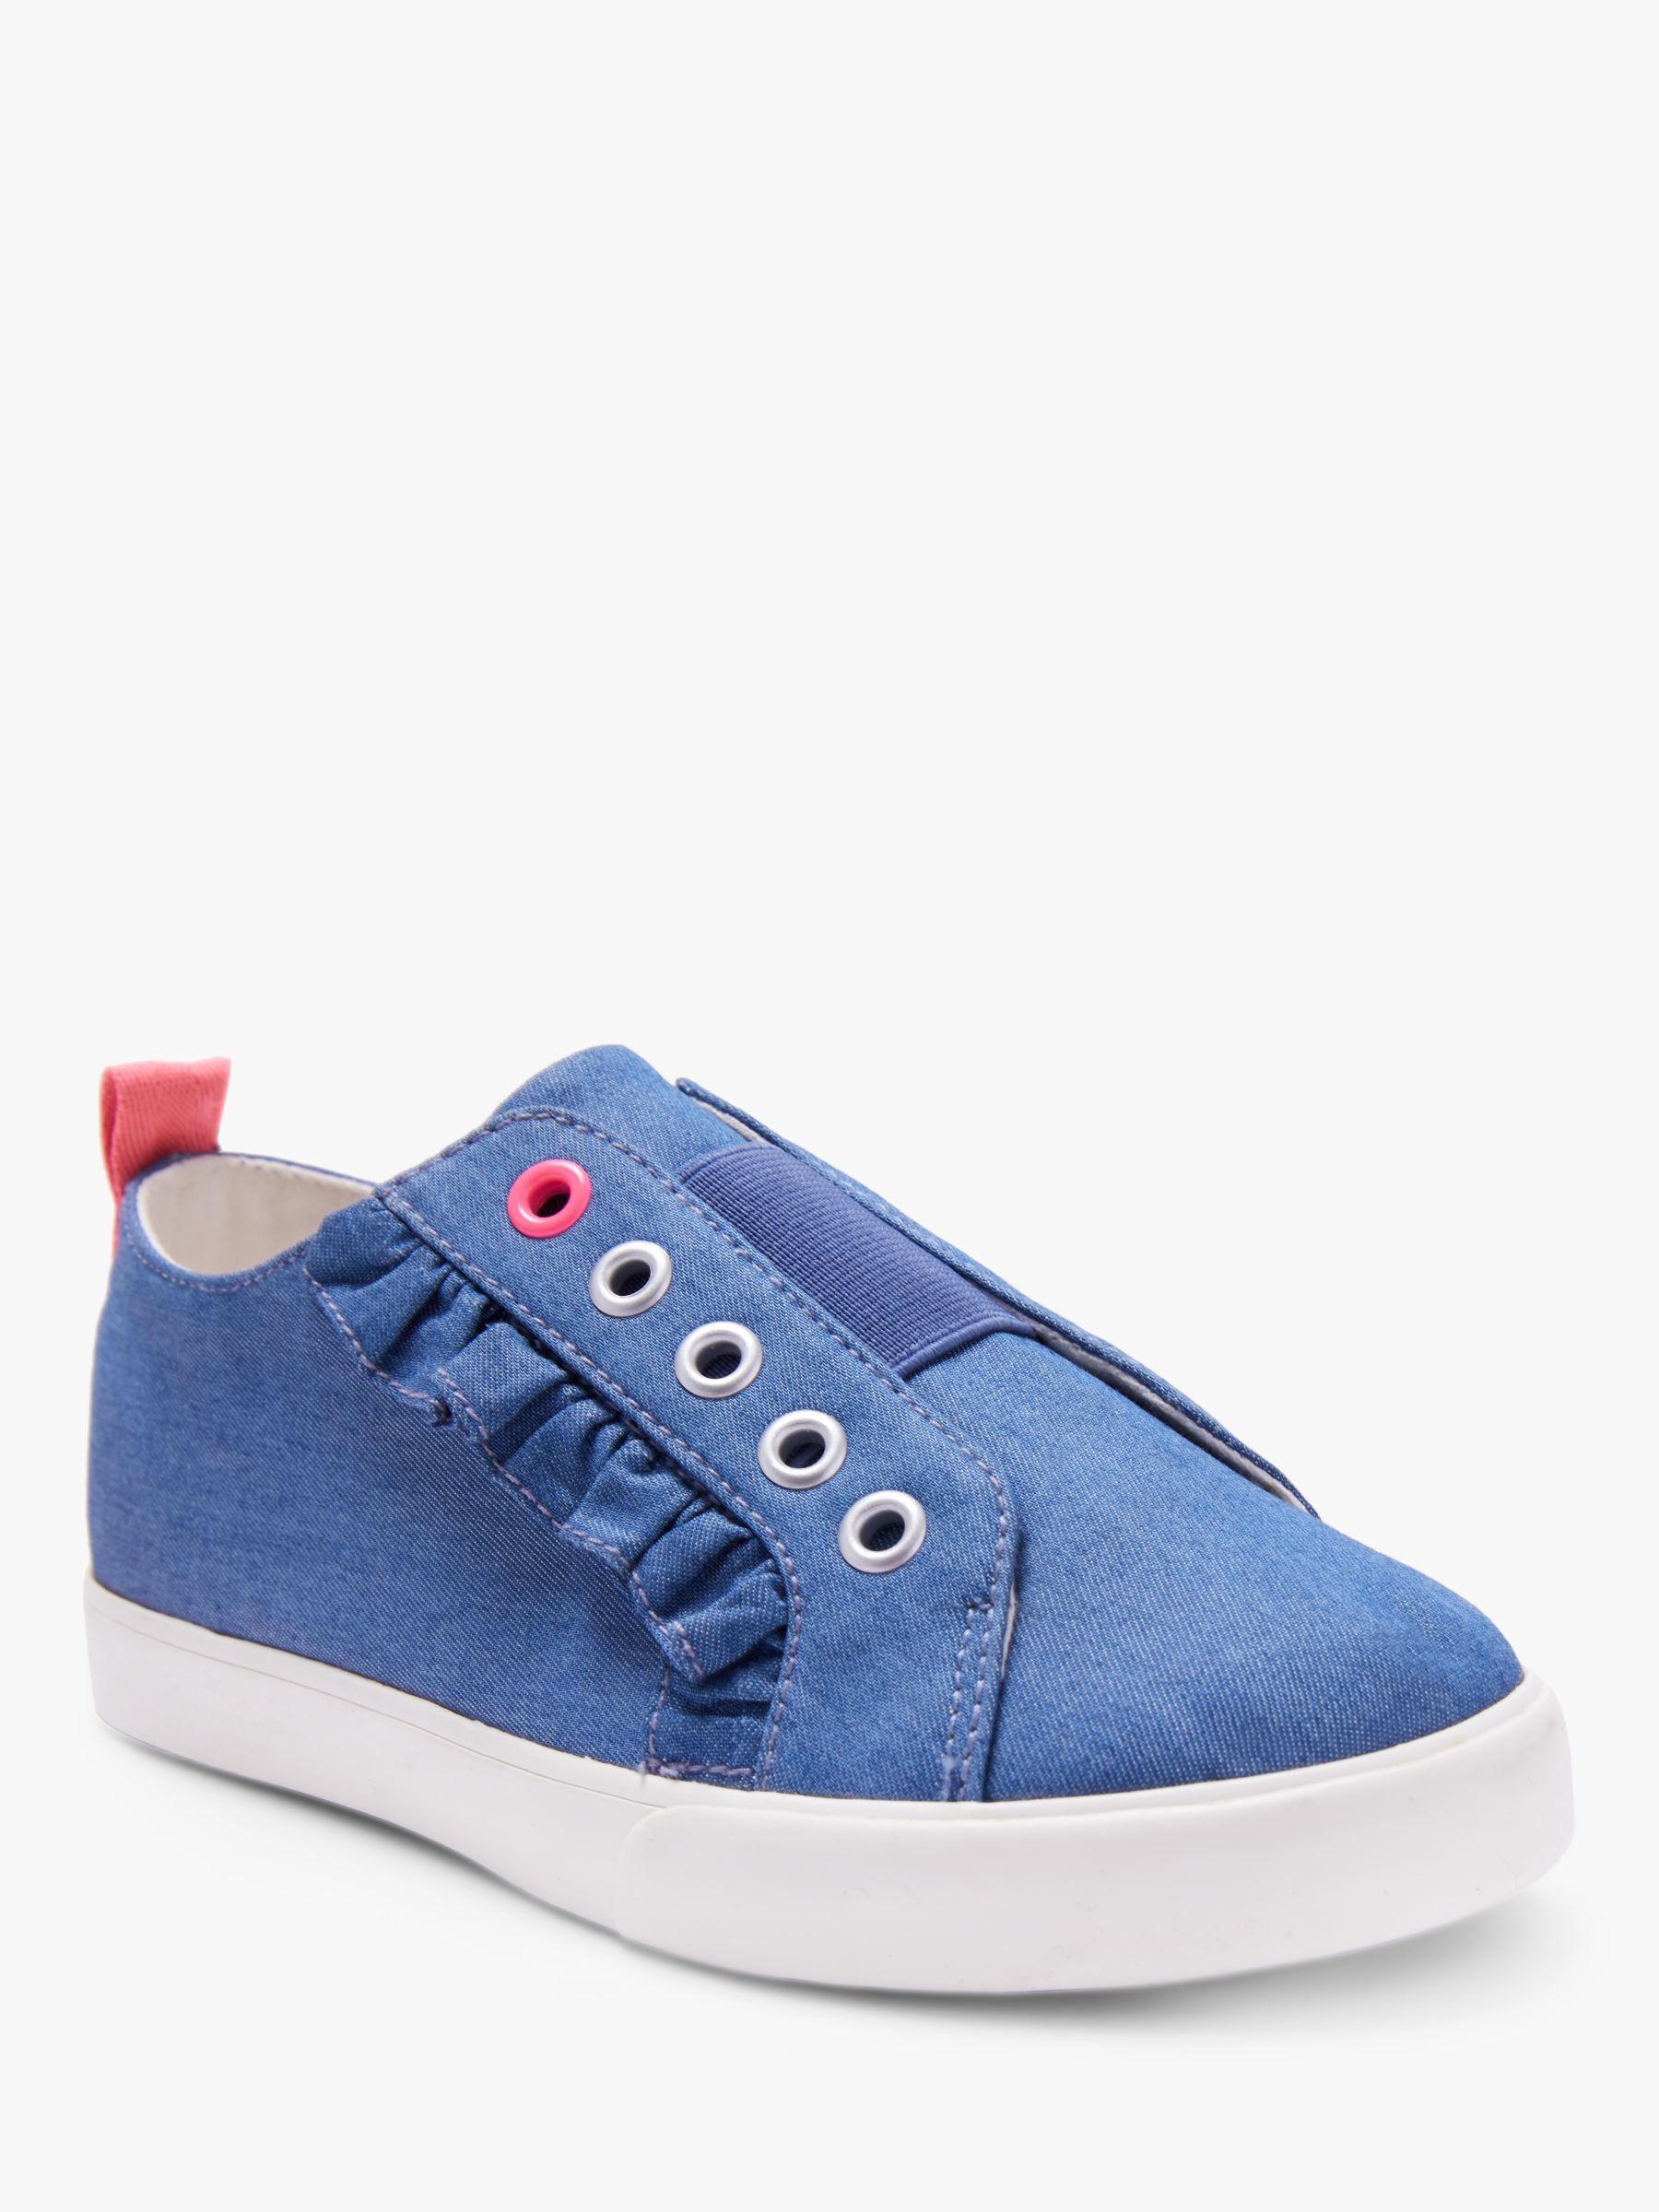 John Lewis & Partners Children's Coco Frill Slip-On Shoes, Blue Denim